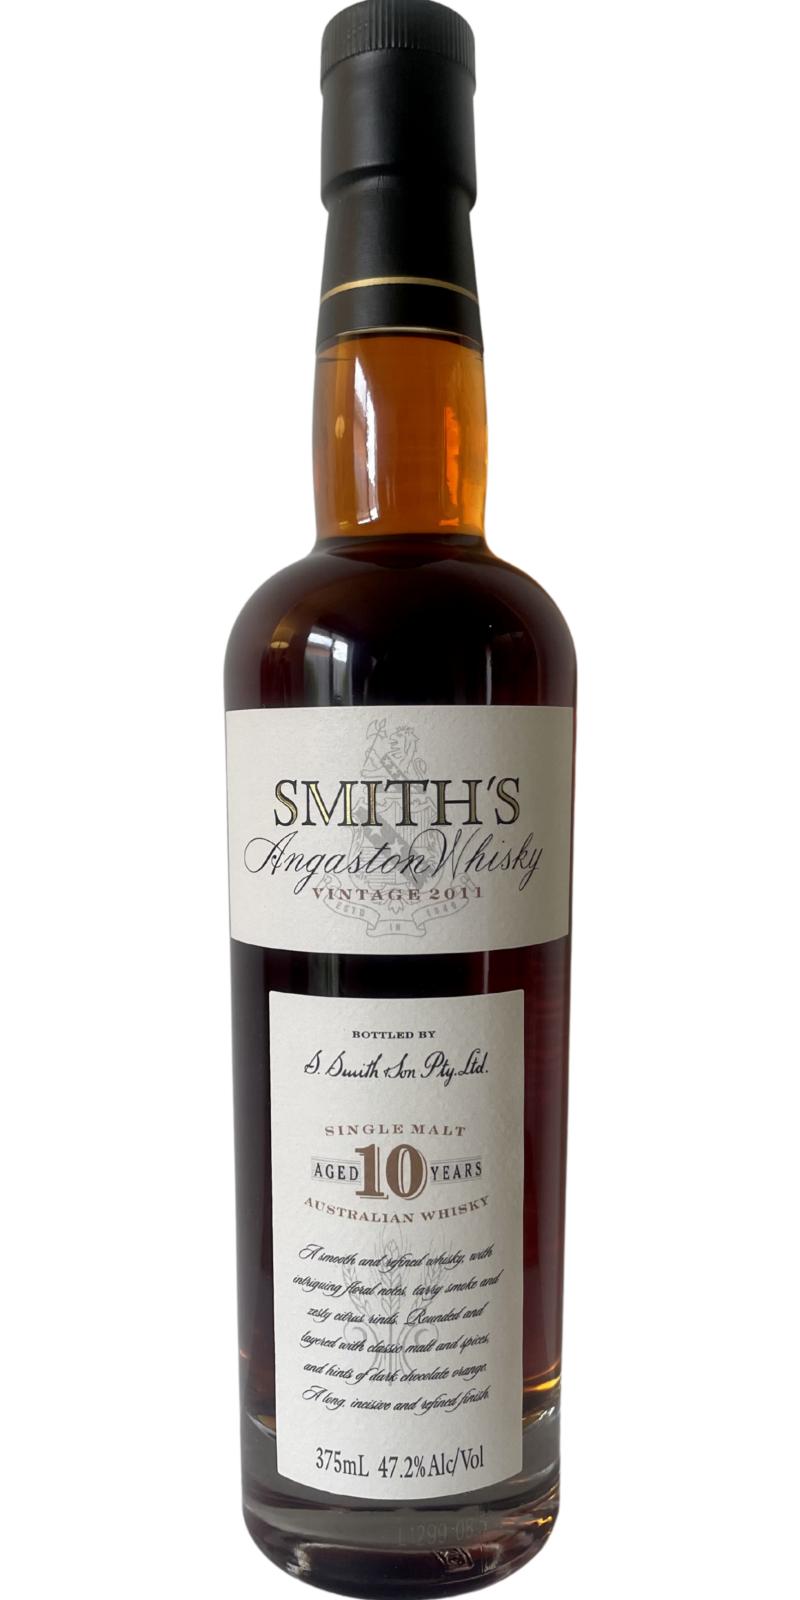 Smith's Angaston Whisky 10yo Antique Muscat 47.2% 375ml